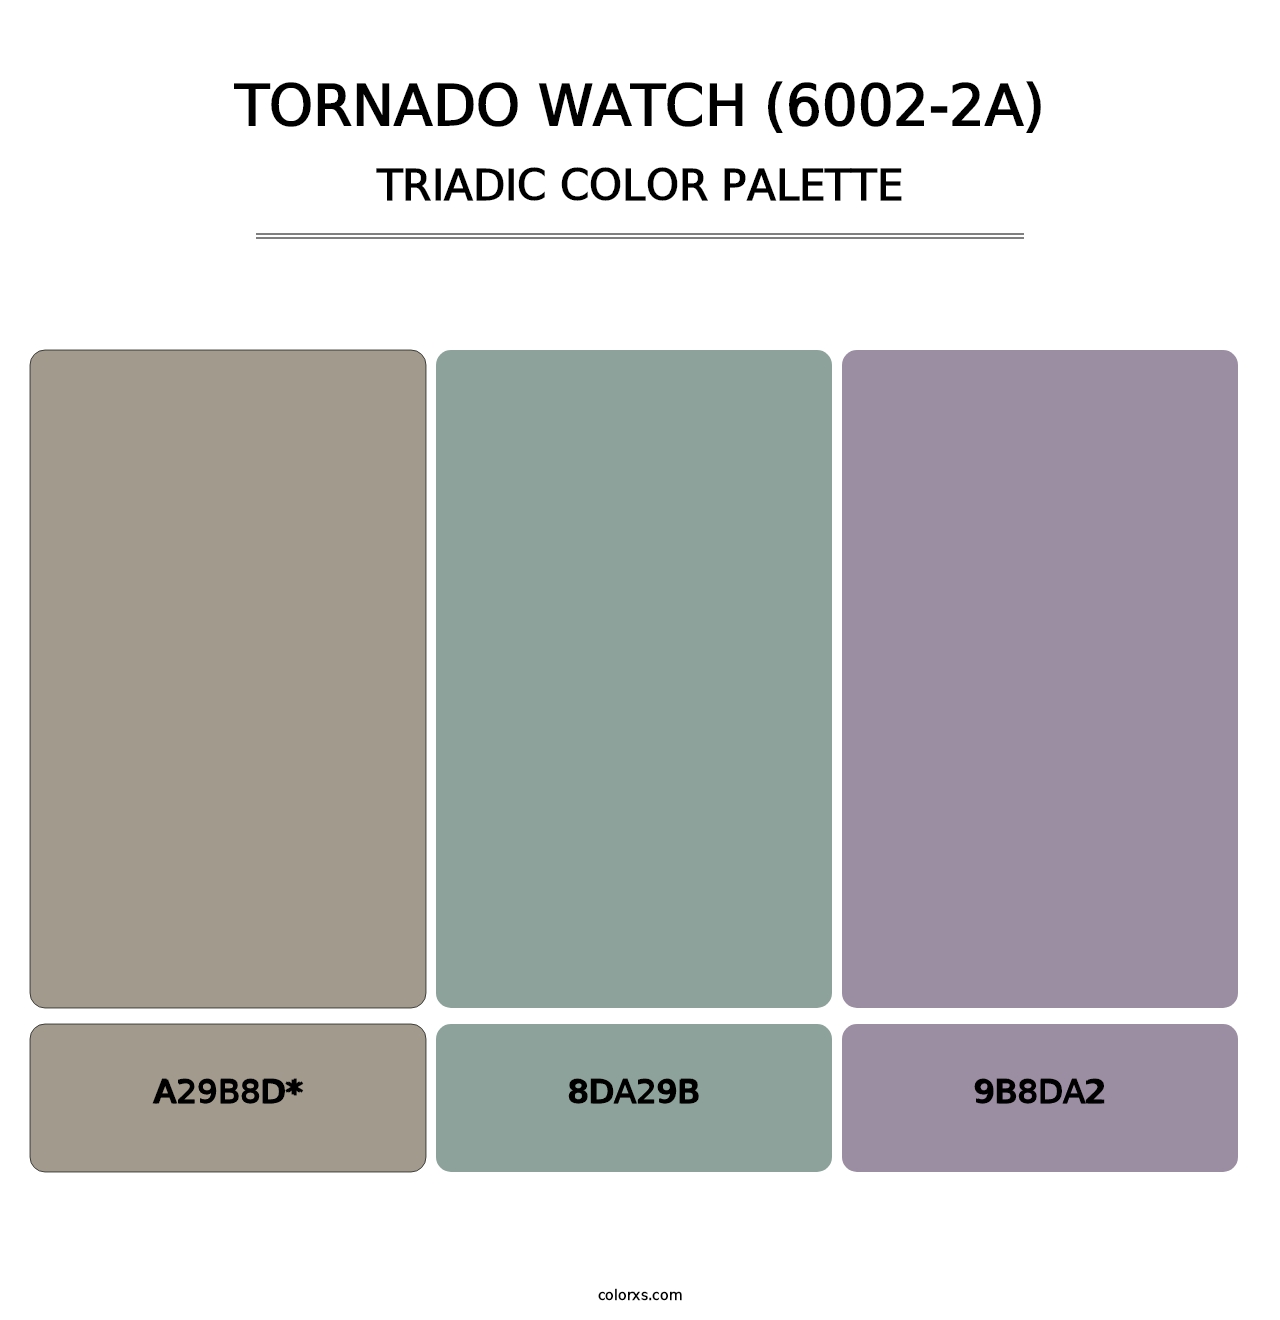 Tornado Watch (6002-2A) - Triadic Color Palette